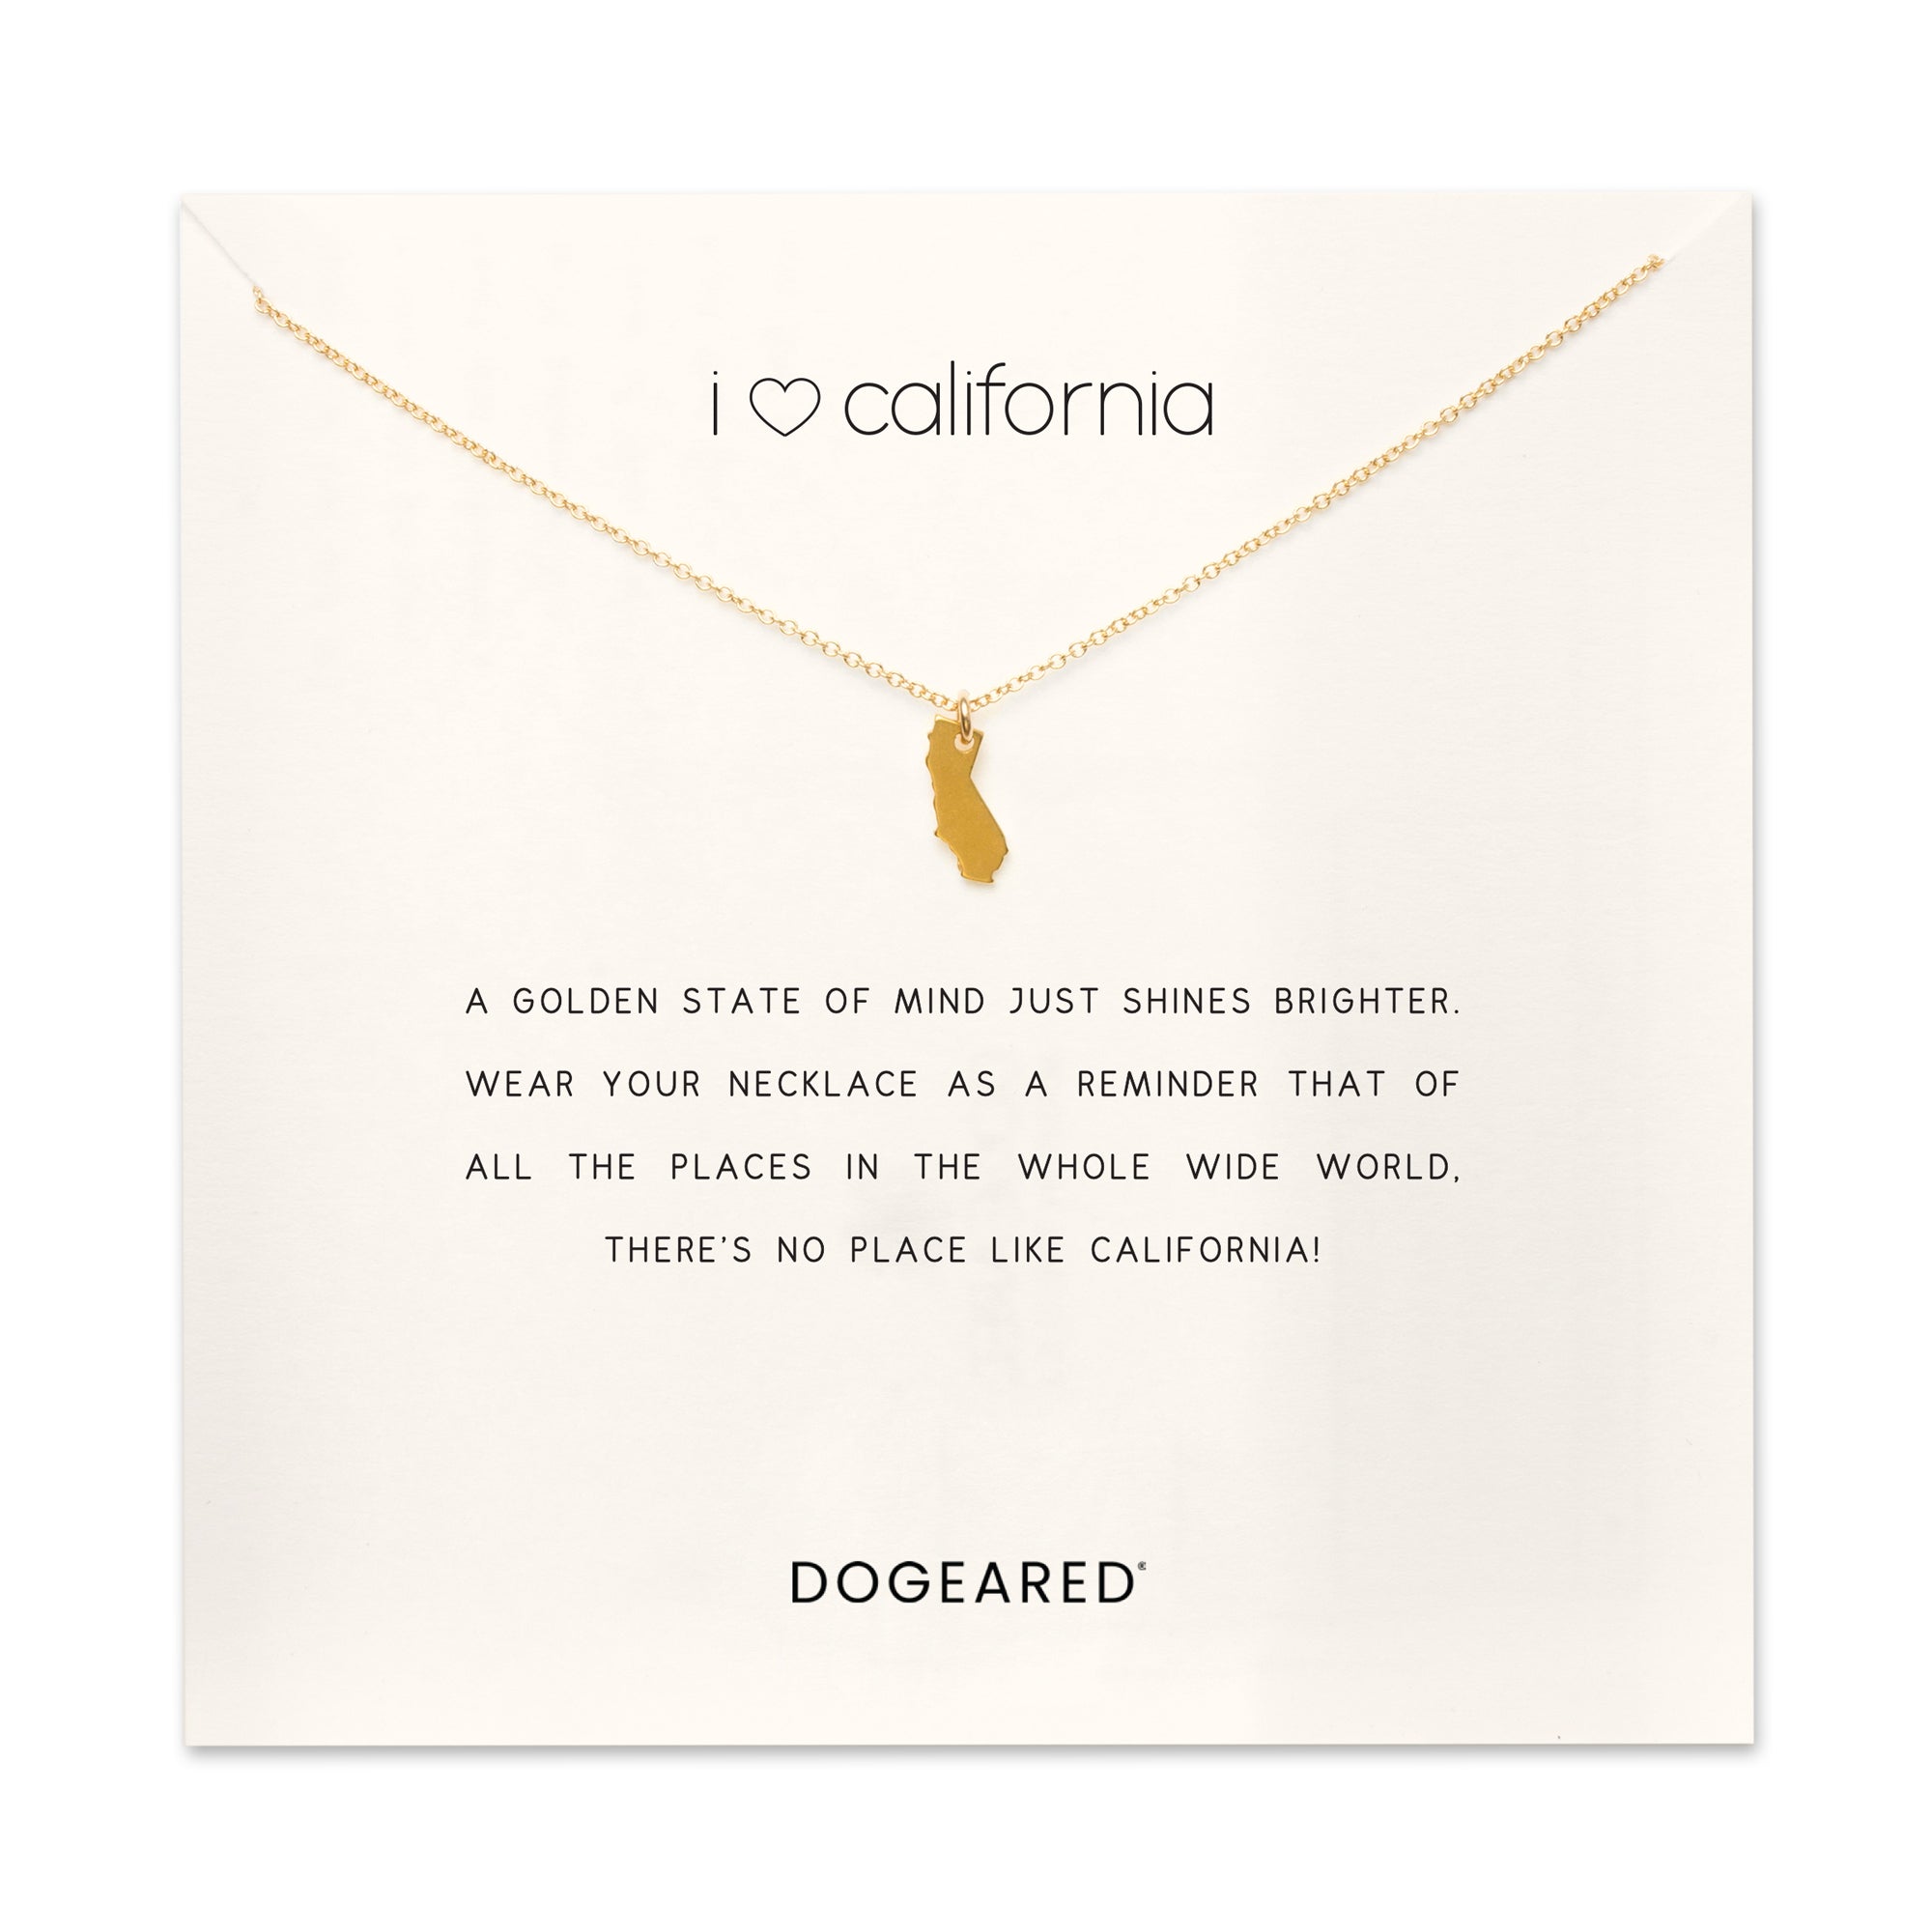 I love California charm necklace - Dogeared